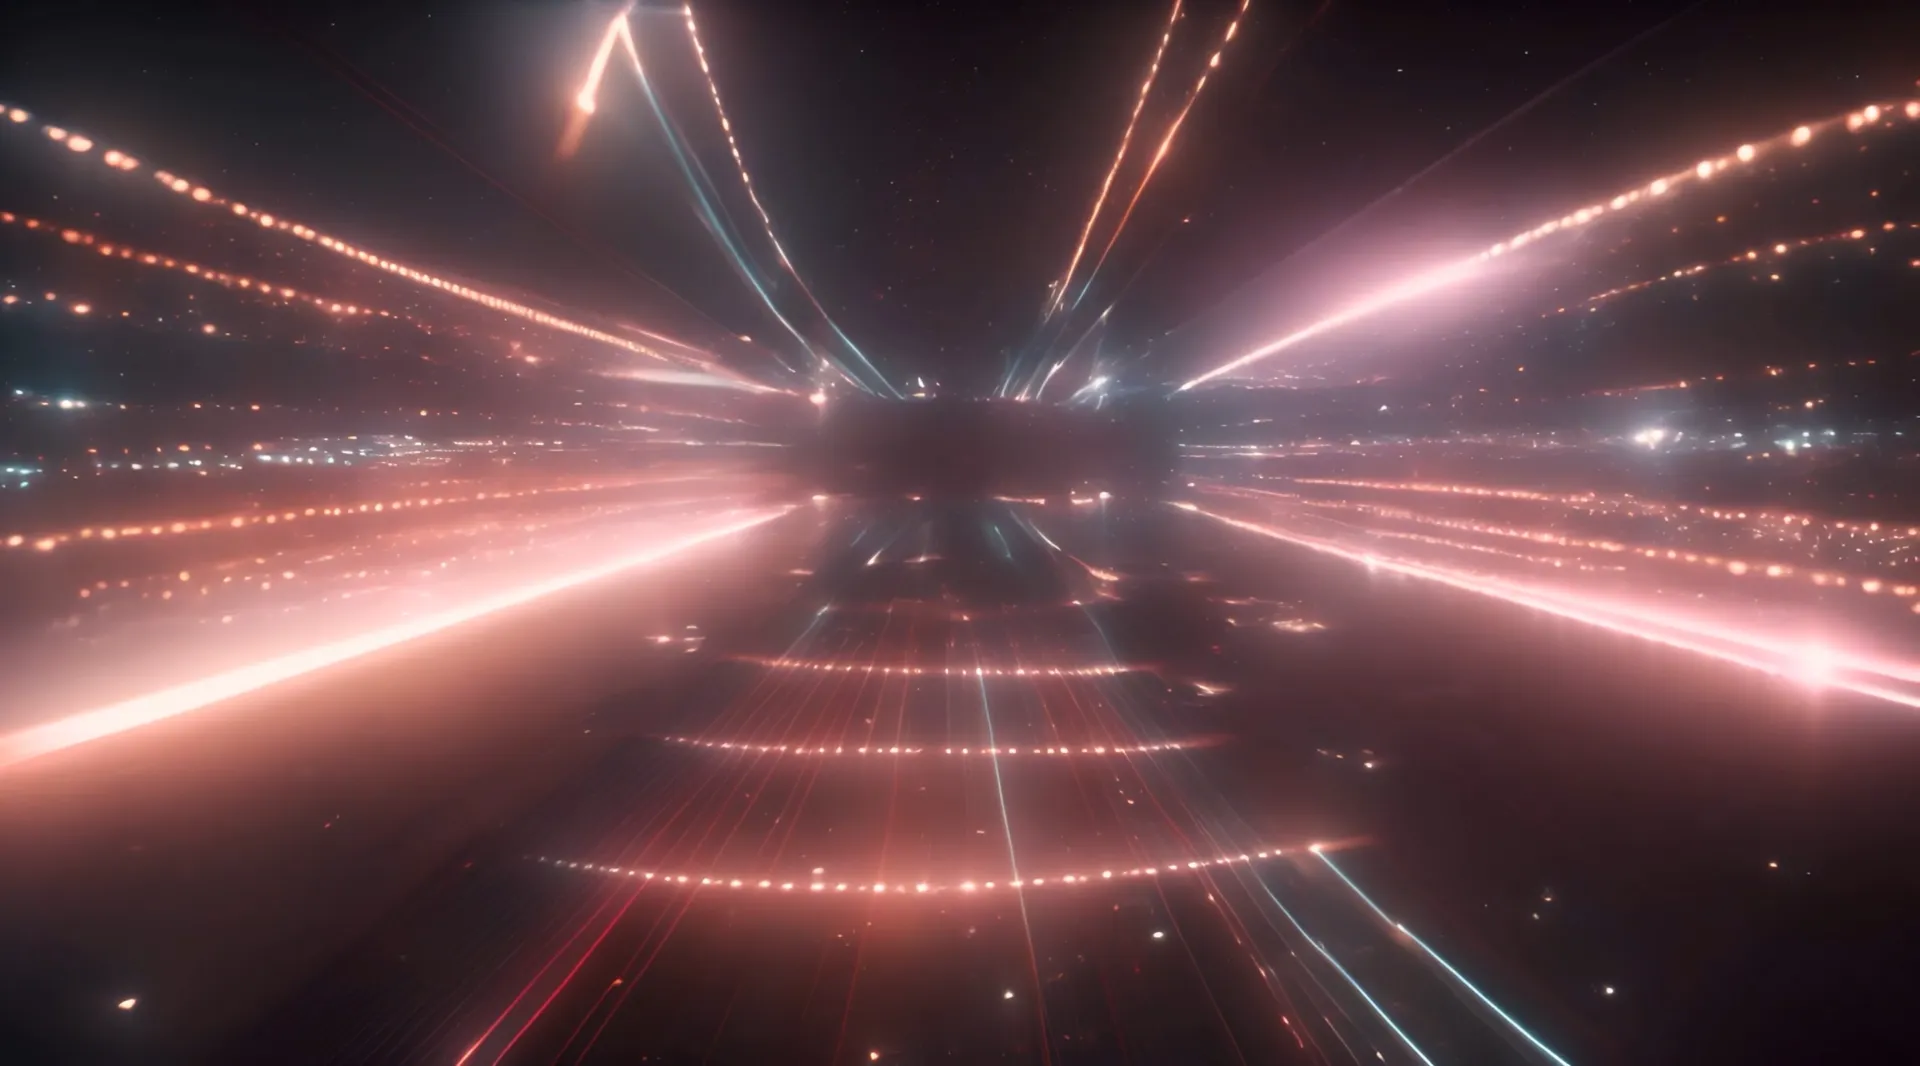 Sci-Fi Star Tunnel Travel Vivid Light Streaks Backdrop